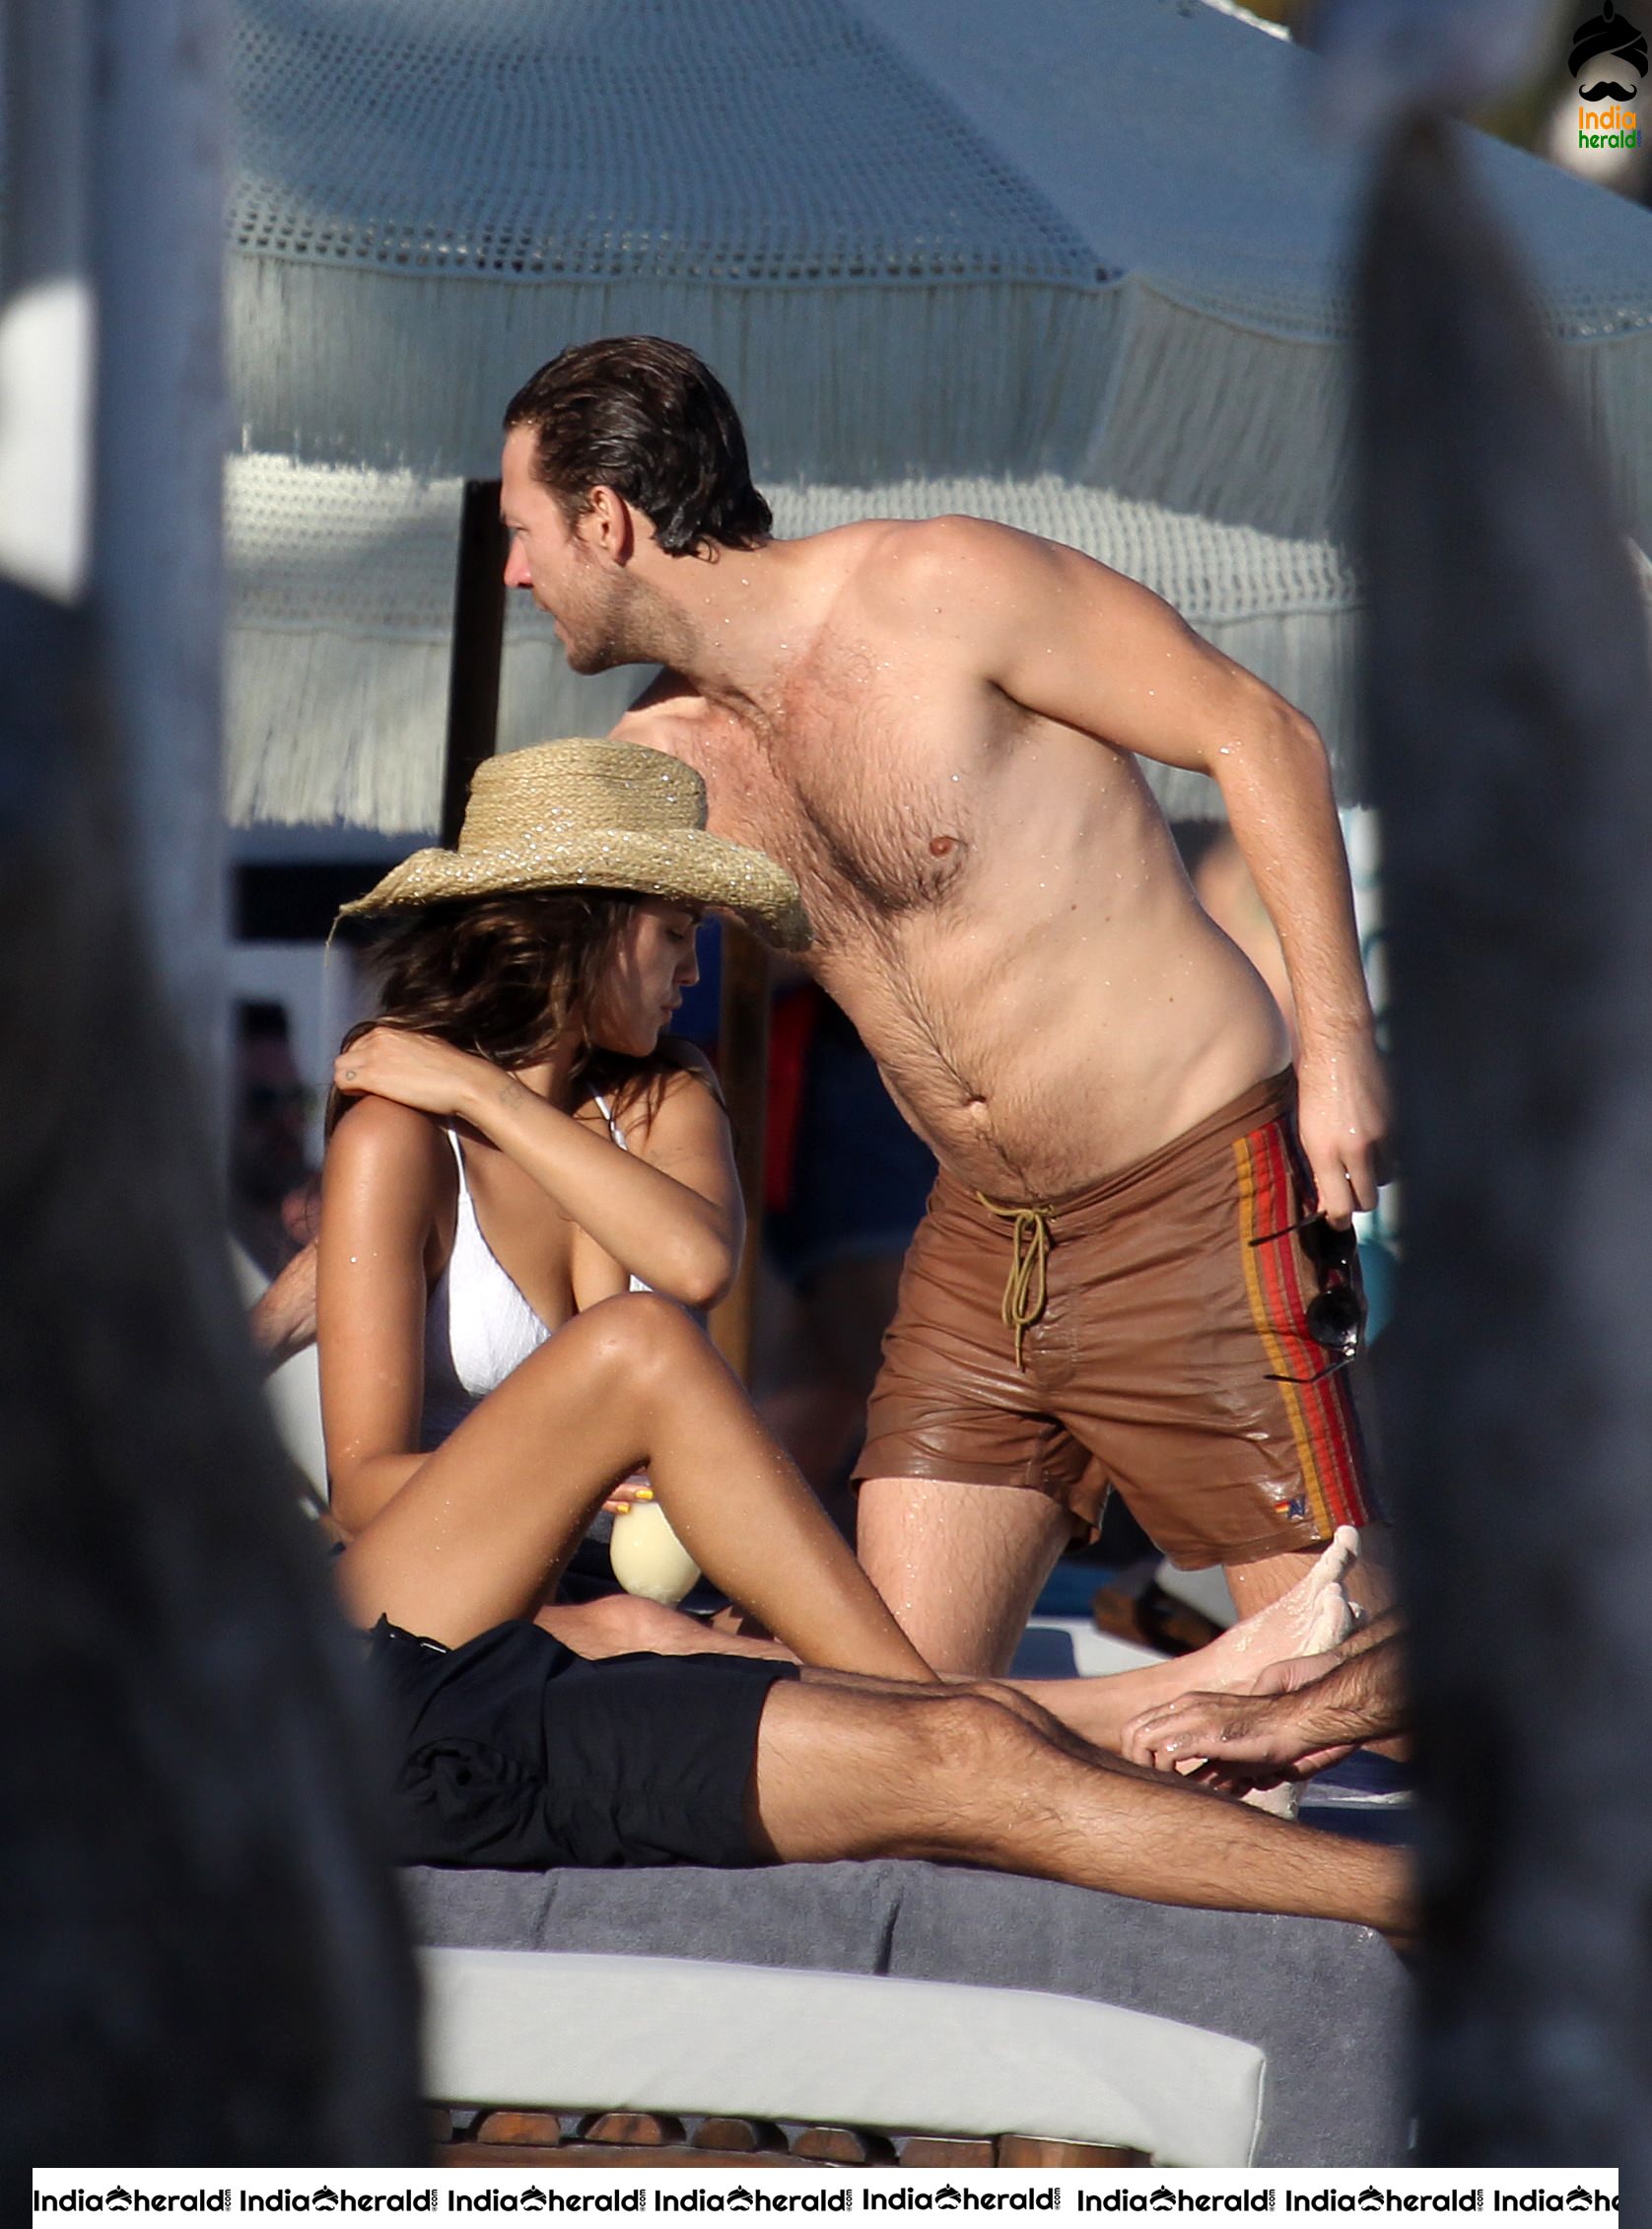 Eiza Gonzalez Enjoying Beach with her Boyfriend and Caught in Bikini